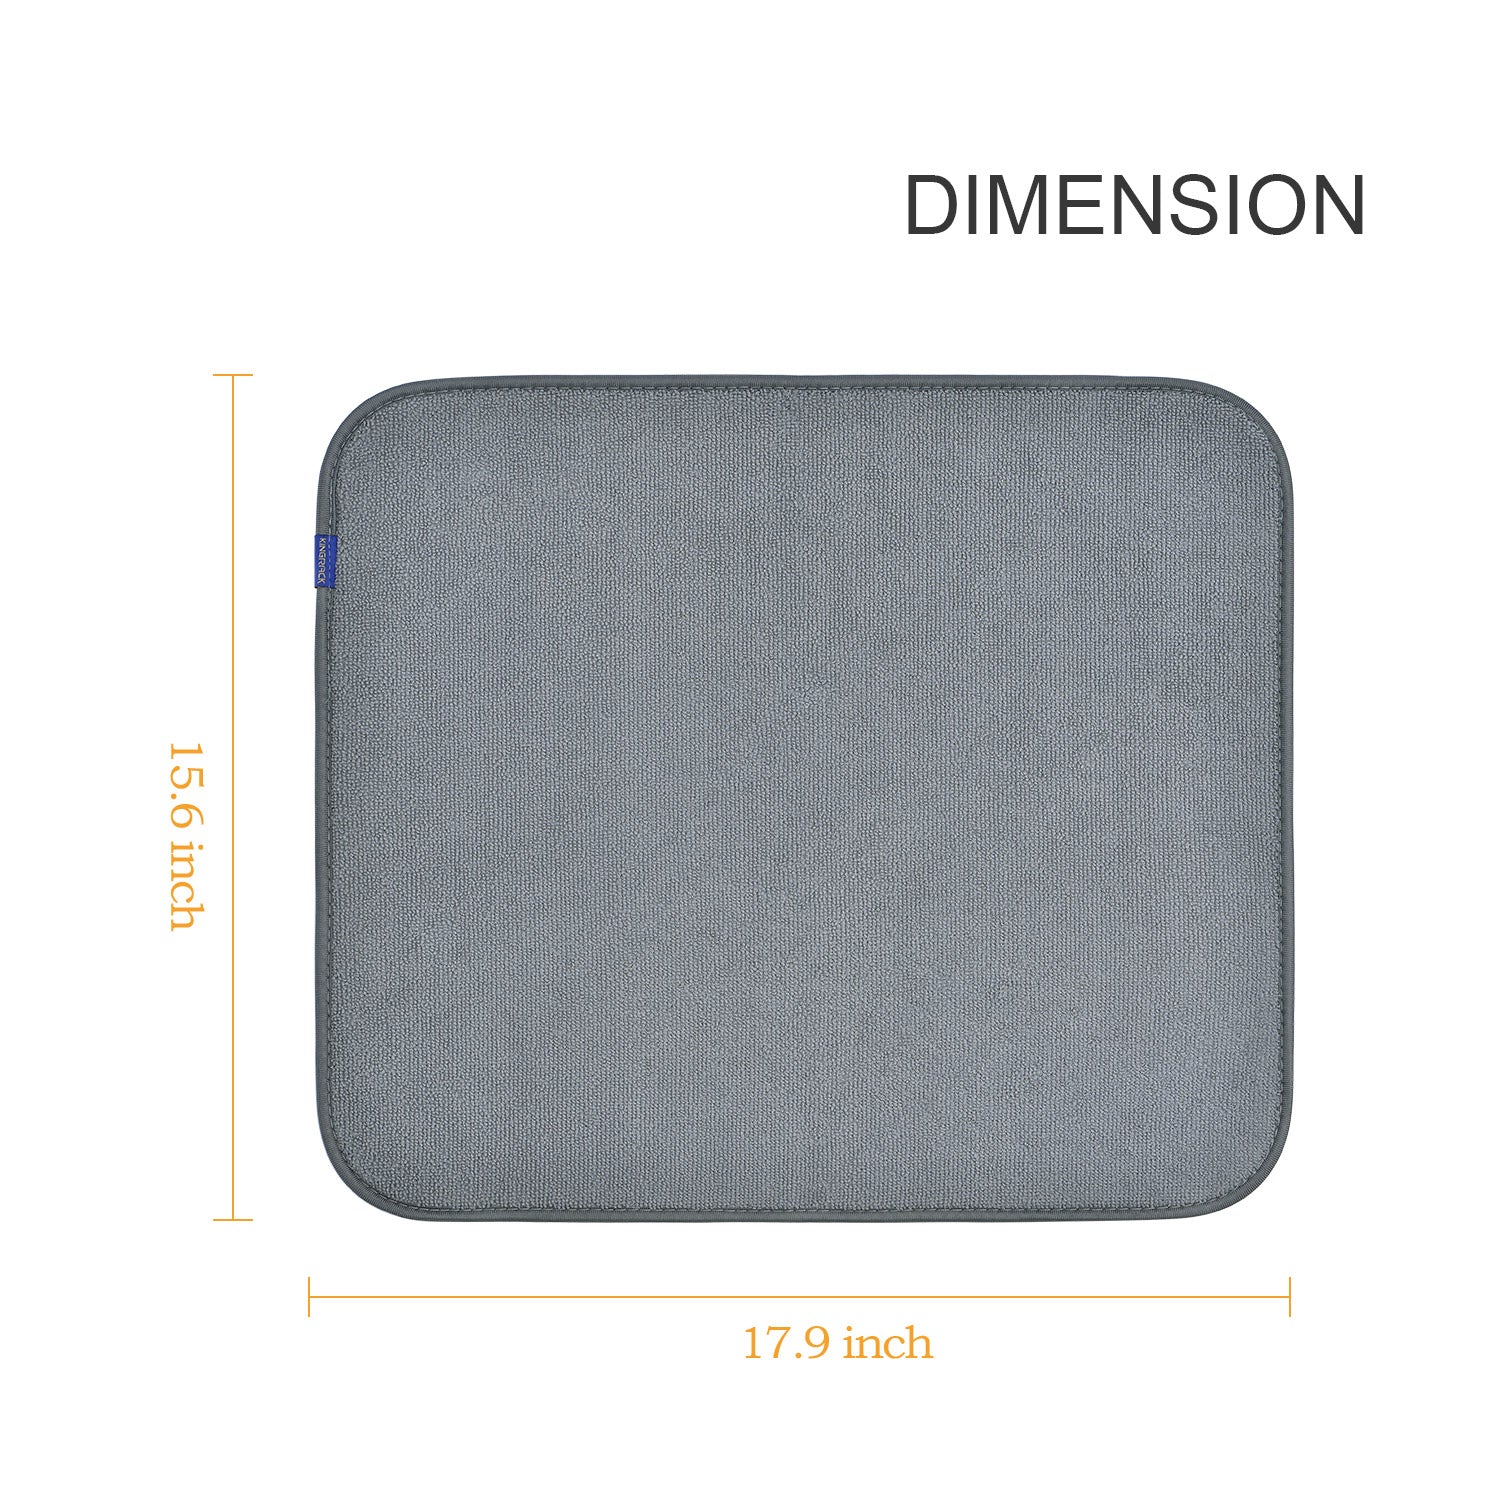 Aluminum Compact Dish Drying Rack with Microfiber Drying Mat 112050 –  Kingrack Home